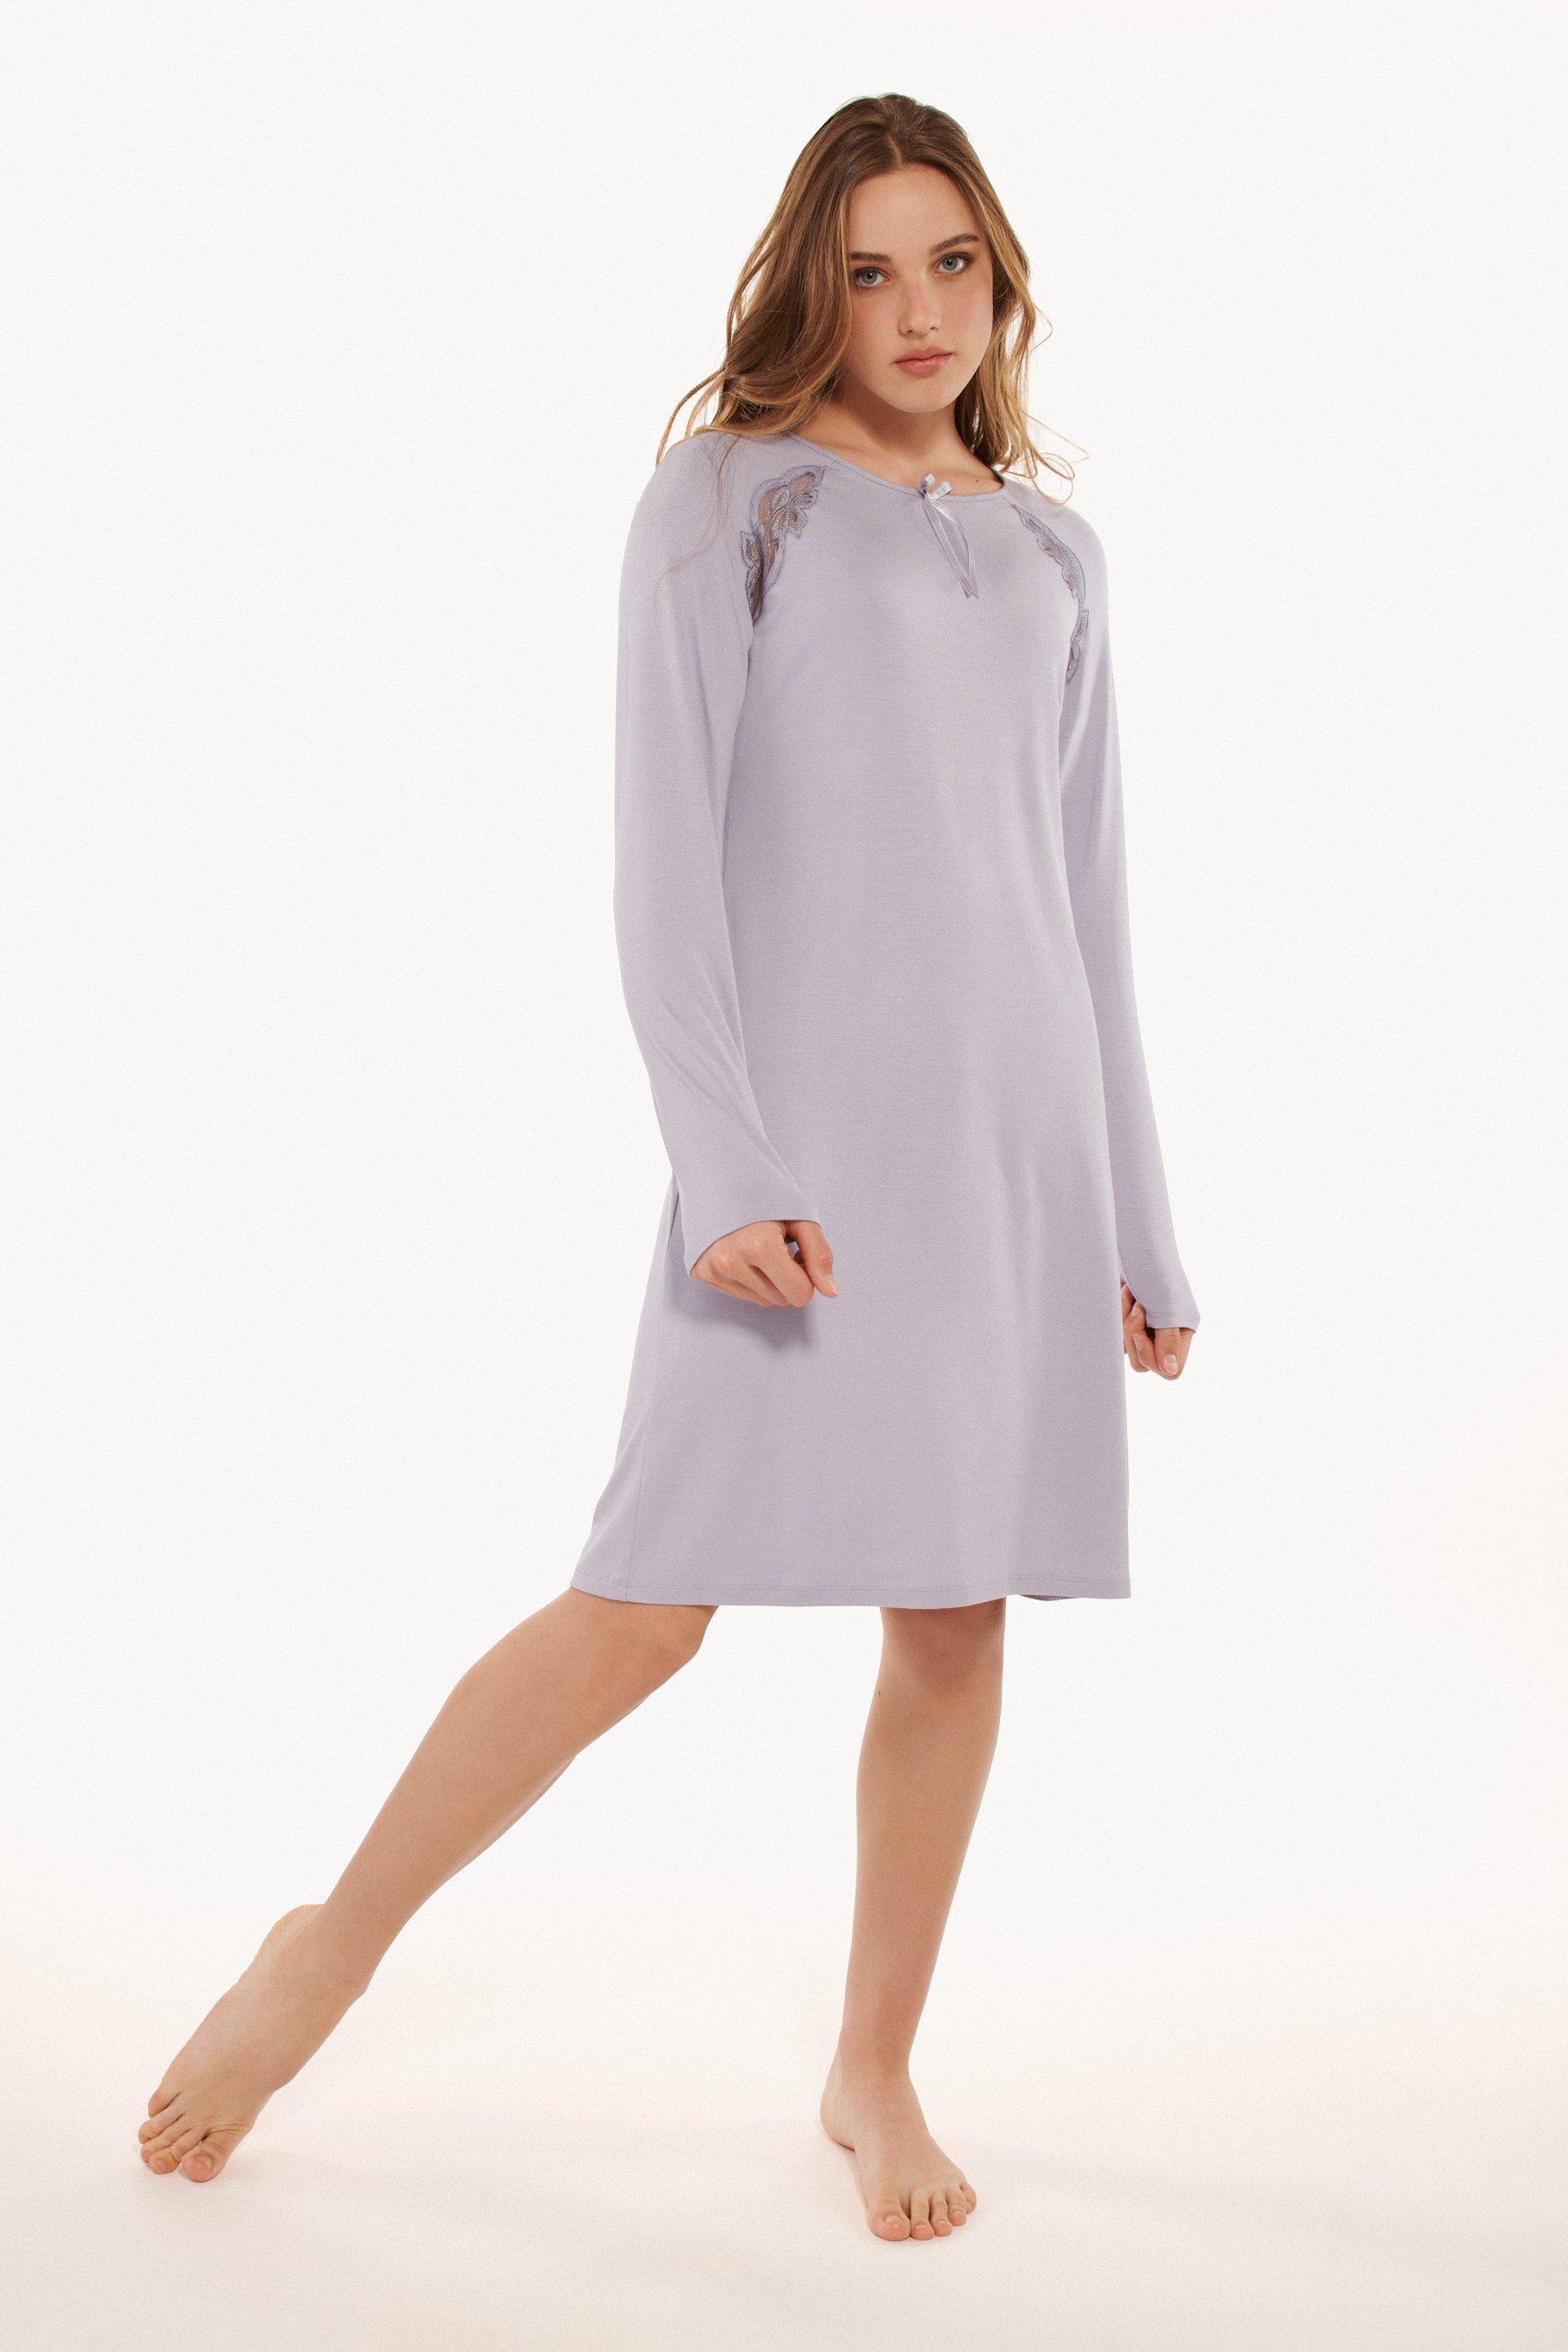 'Ivette' Long Sleeve Nightdress